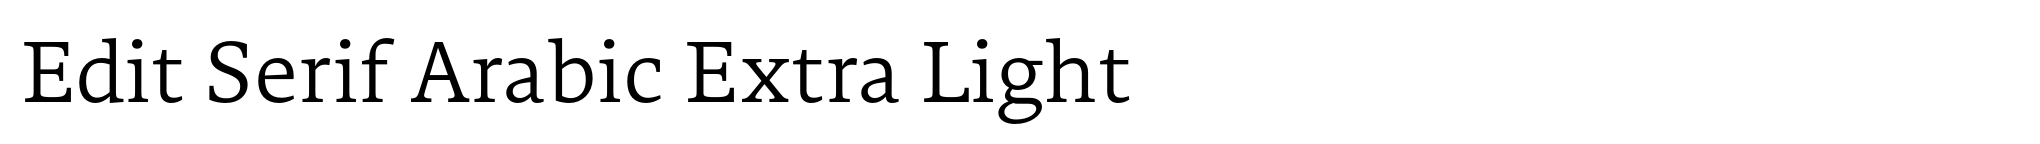 Edit Serif Arabic Extra Light image